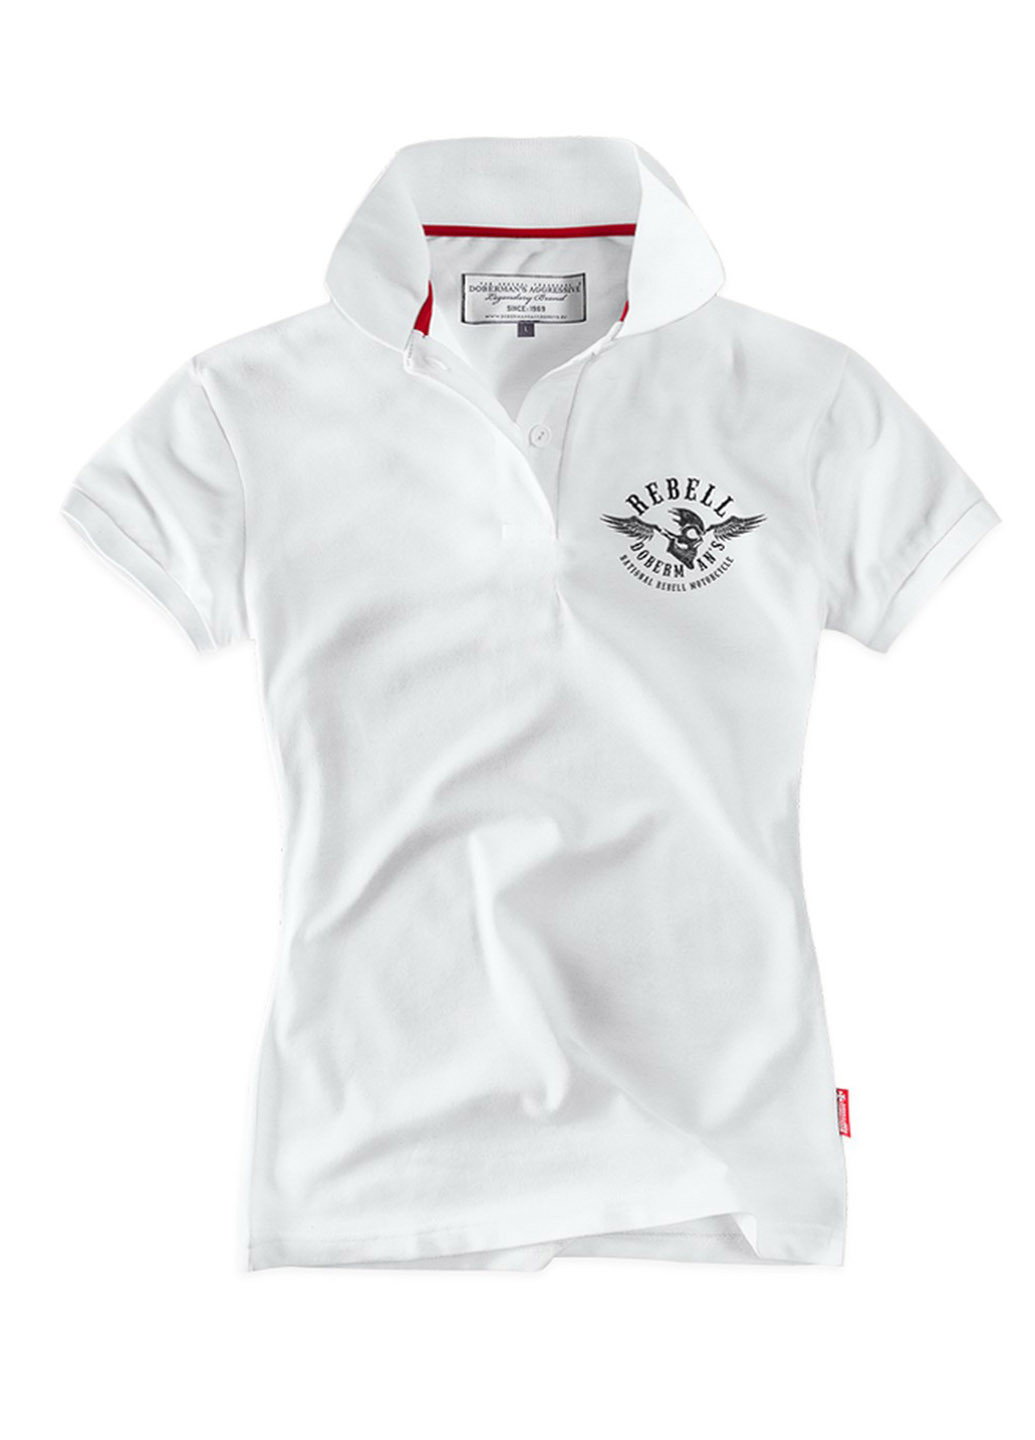 Белая женская футболка-футболка поло dobermans rebell tspd163wt Dobermans Aggressive